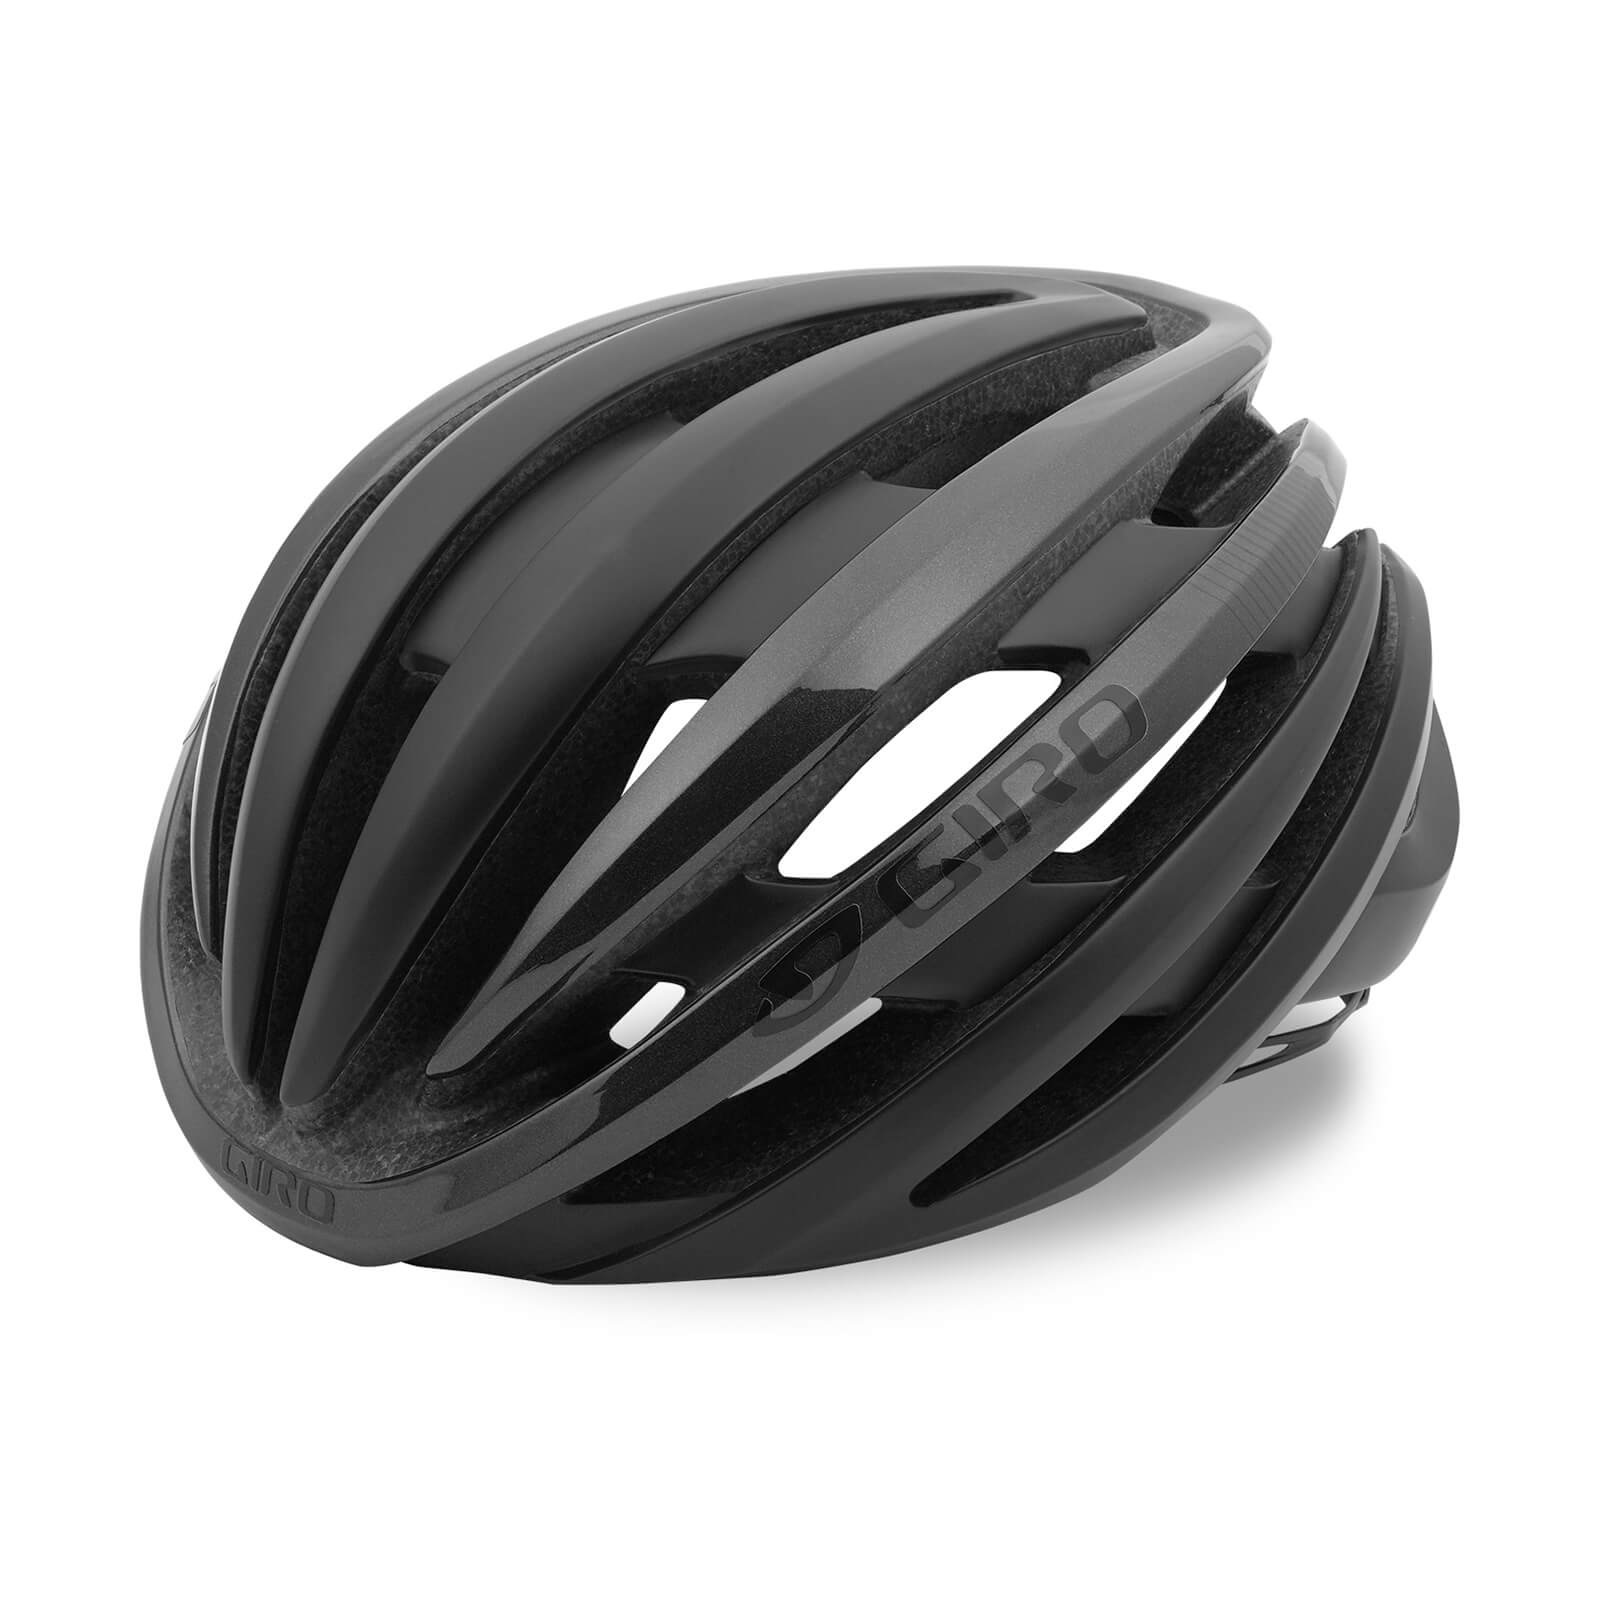 Giro Cinder MIPS Road Helmet - 2019 - L/59-63cm - Matt Black/Charcoal